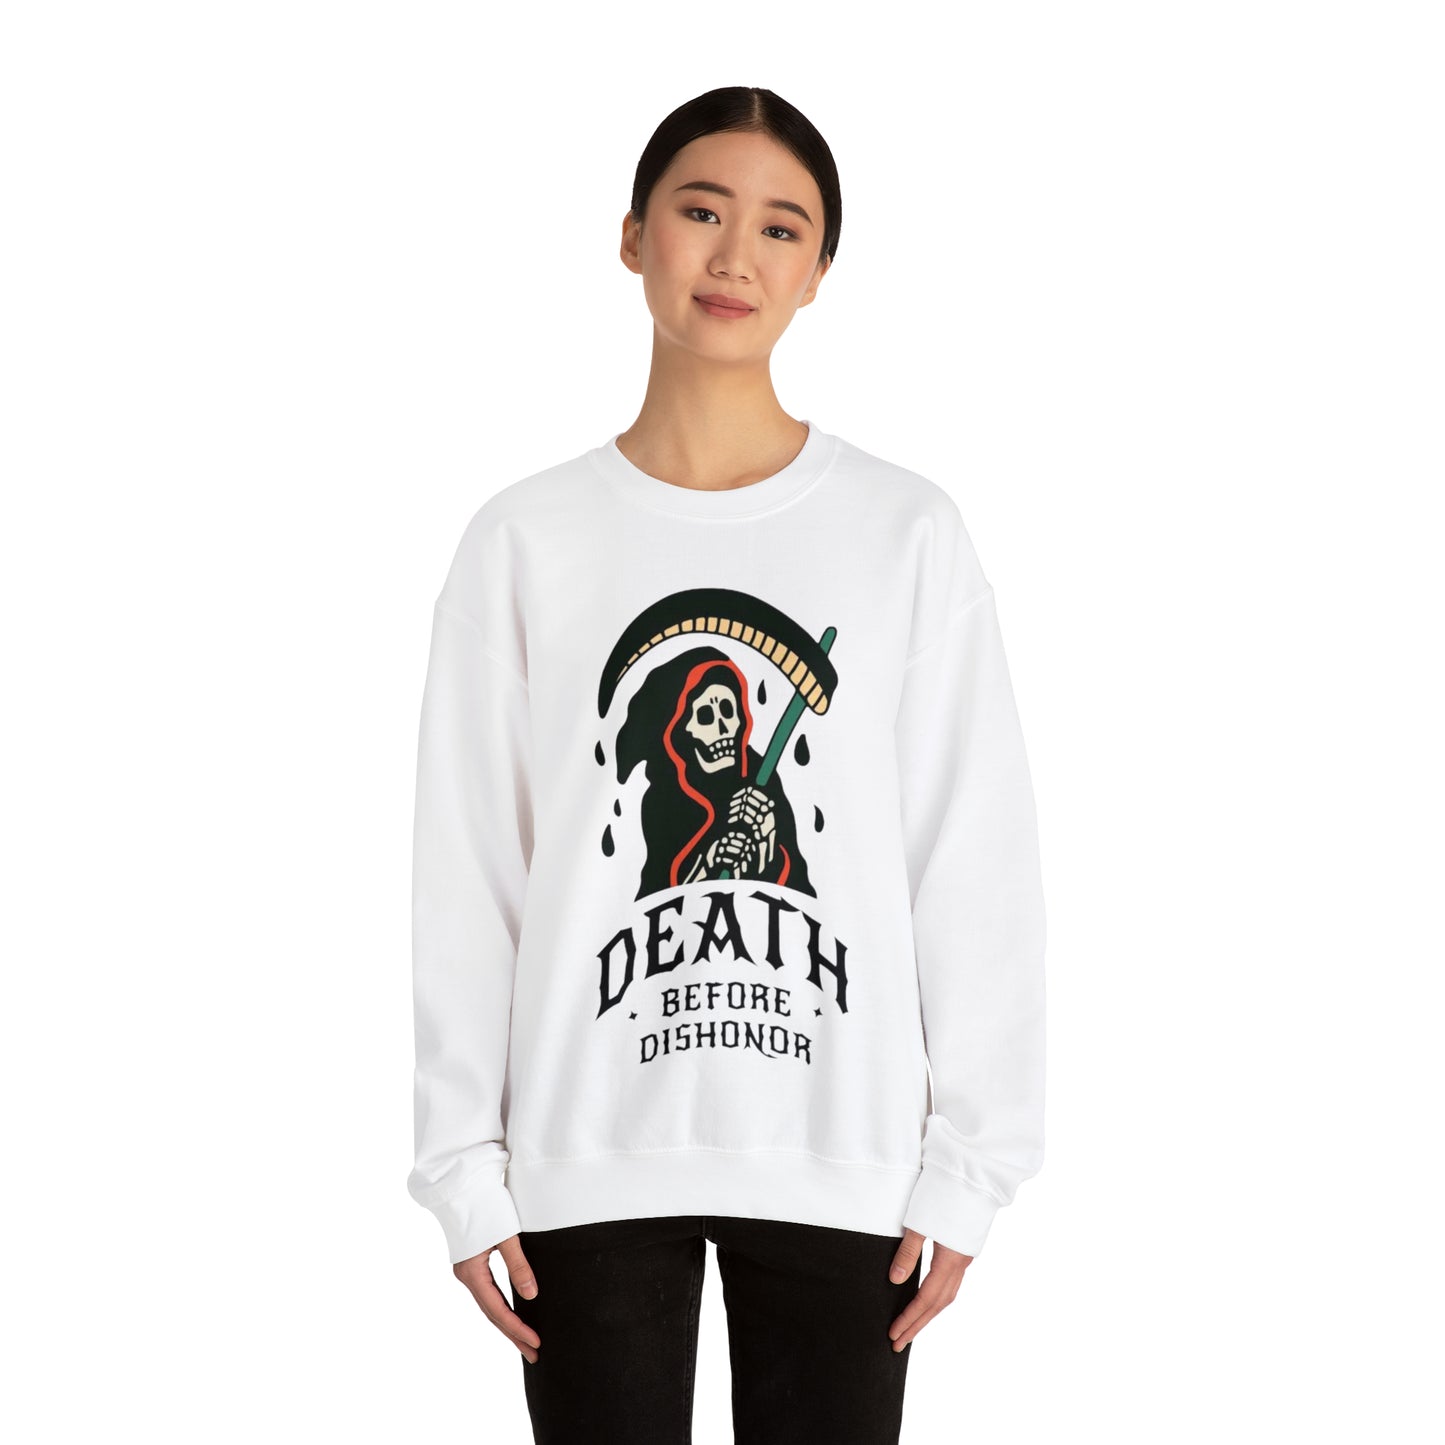 Death before dishonor Crewneck Sweatshirt